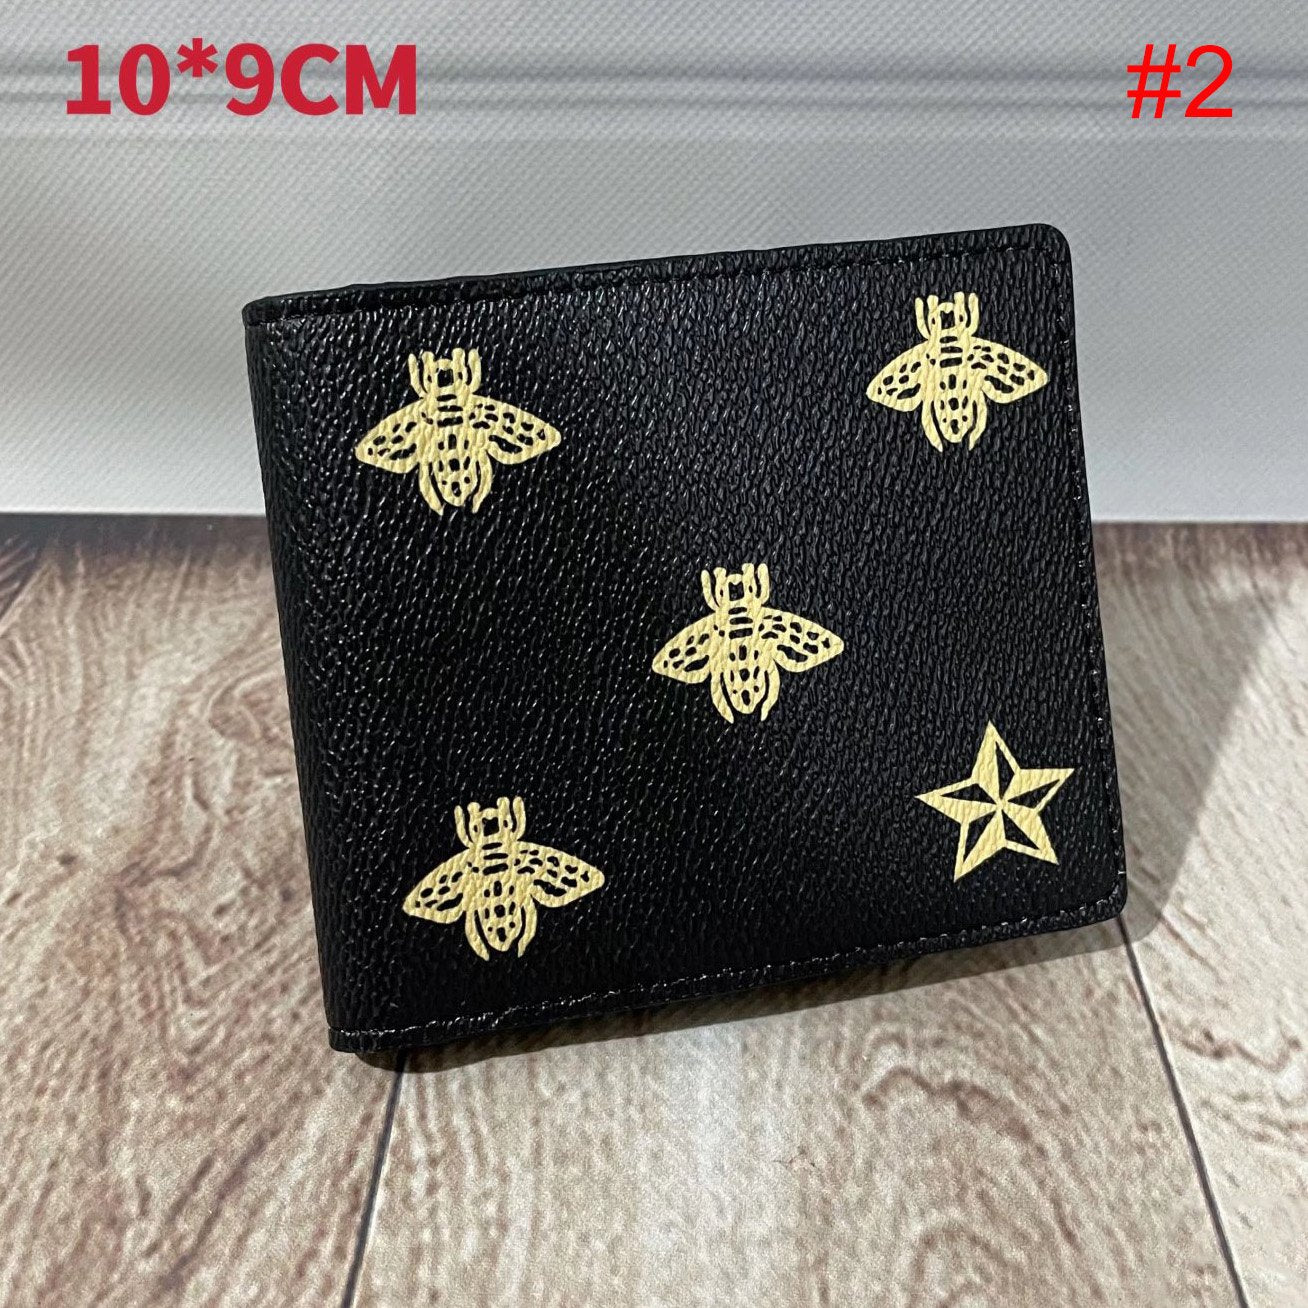 G U C C I Fashion Letters Leather Handbag Purse Wallet